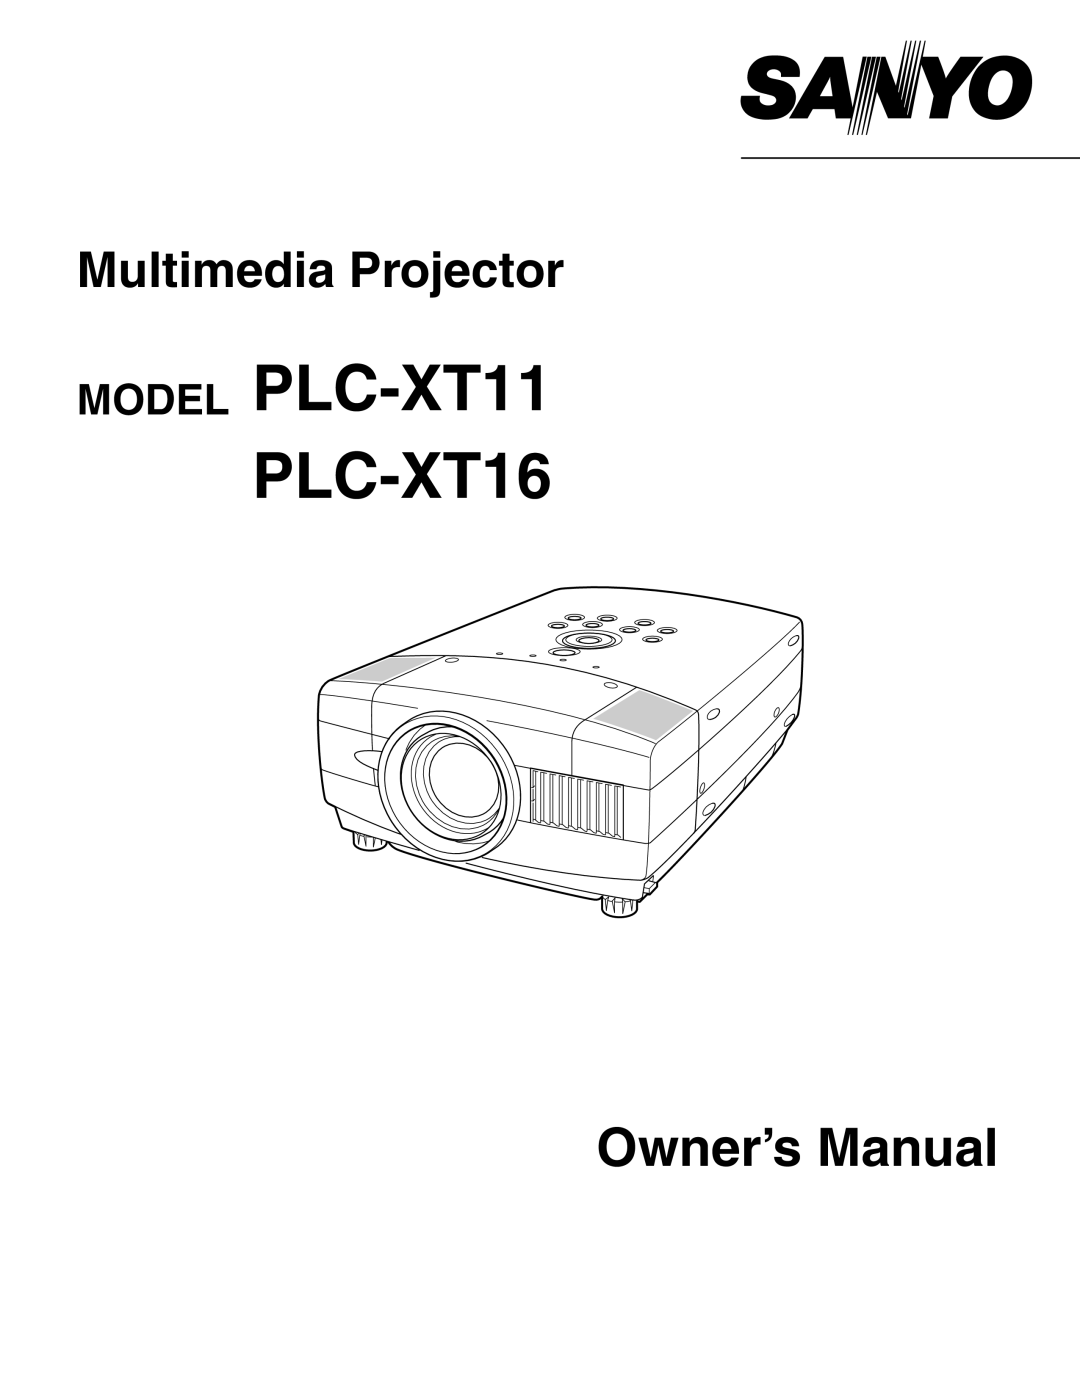 Sanyo owner manual MODEL PLC-XT11 PLC-XT16, Multimedia Projector 